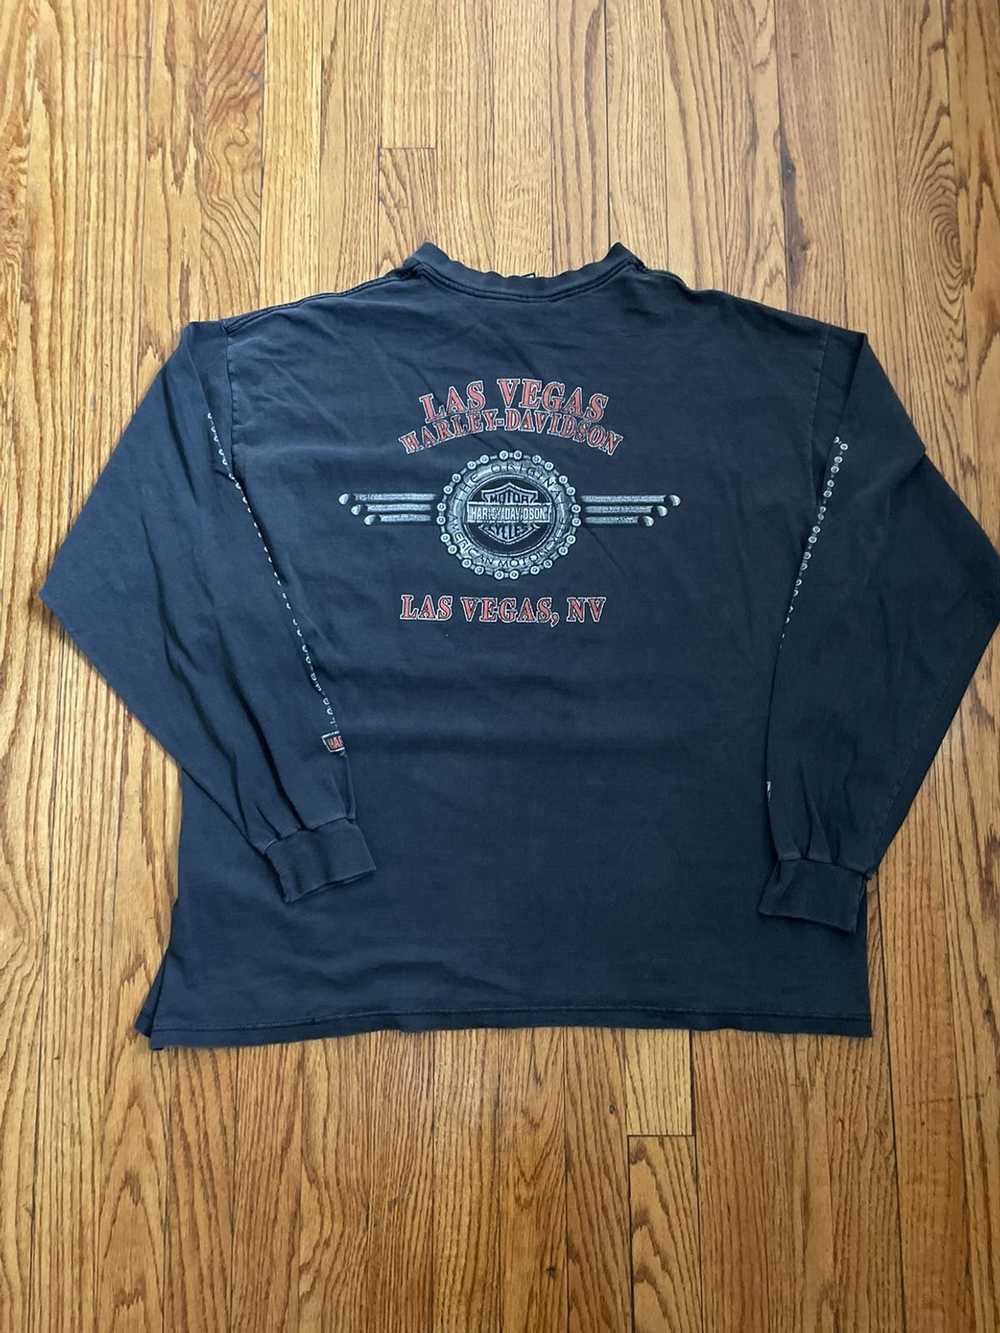 Harley Davidson Vintage harley longsleeve - image 2